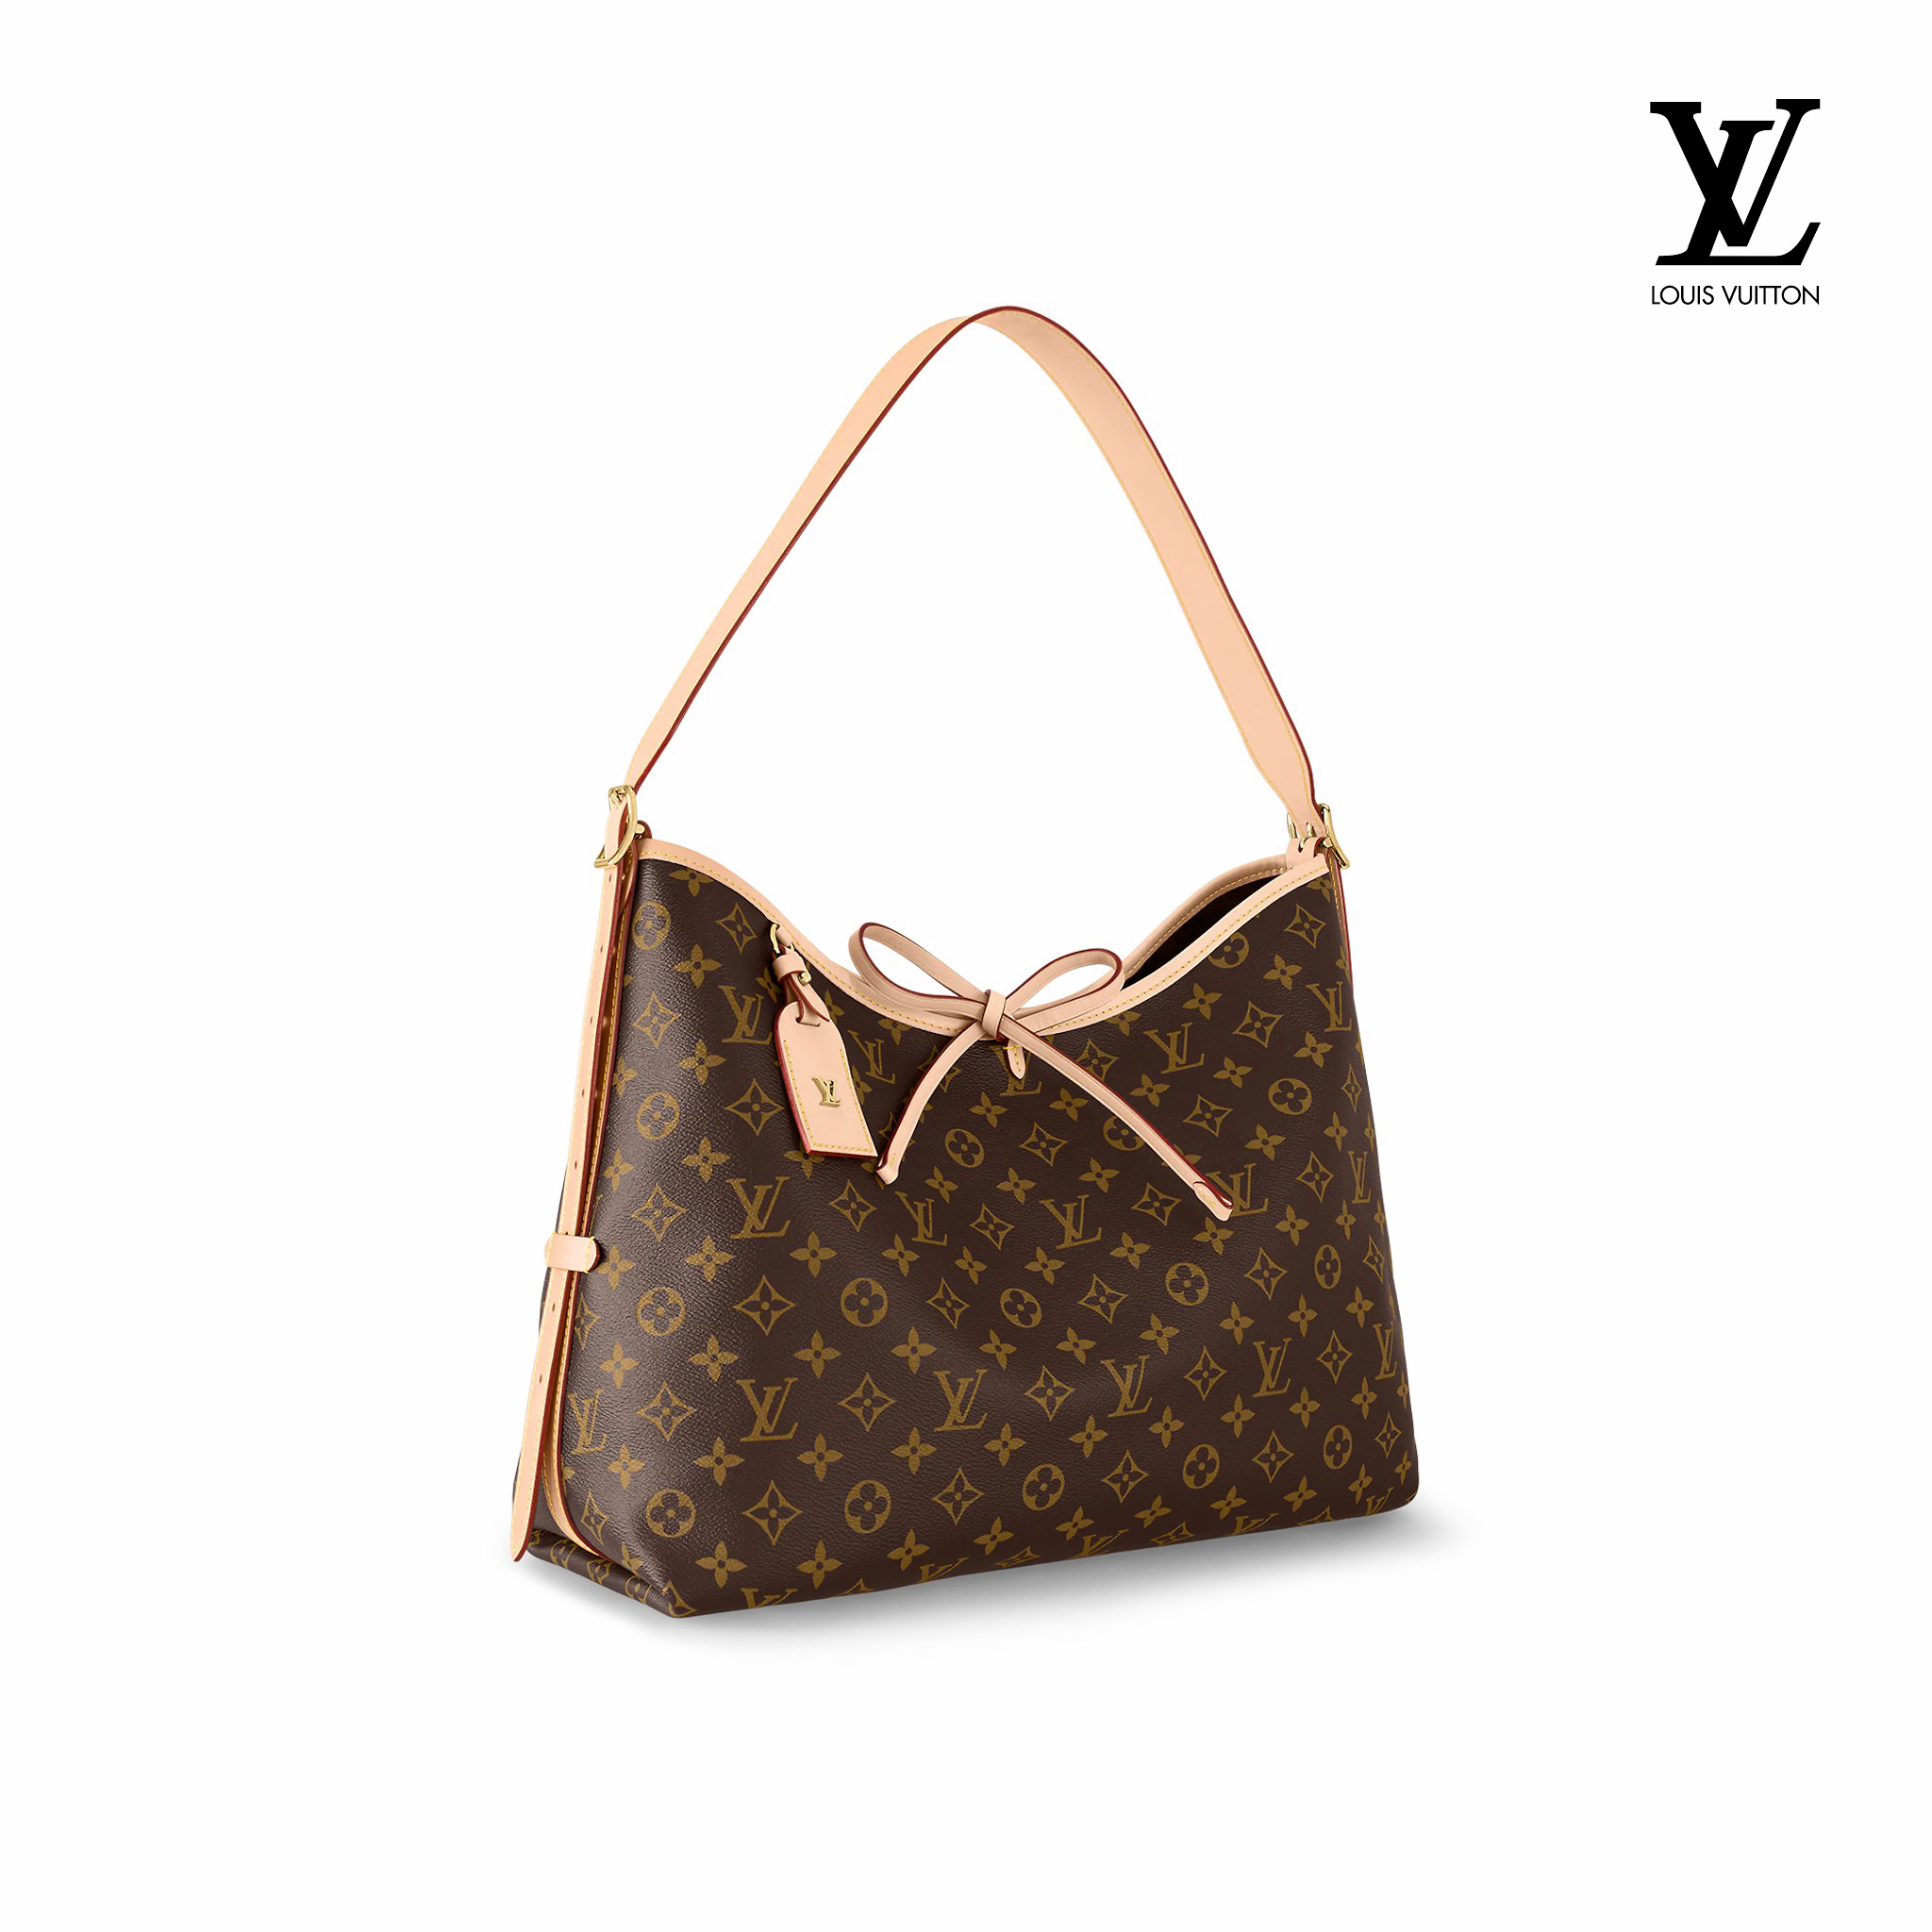 Louis Vuitton CarryAll MM - Luxury Ladies Handbag